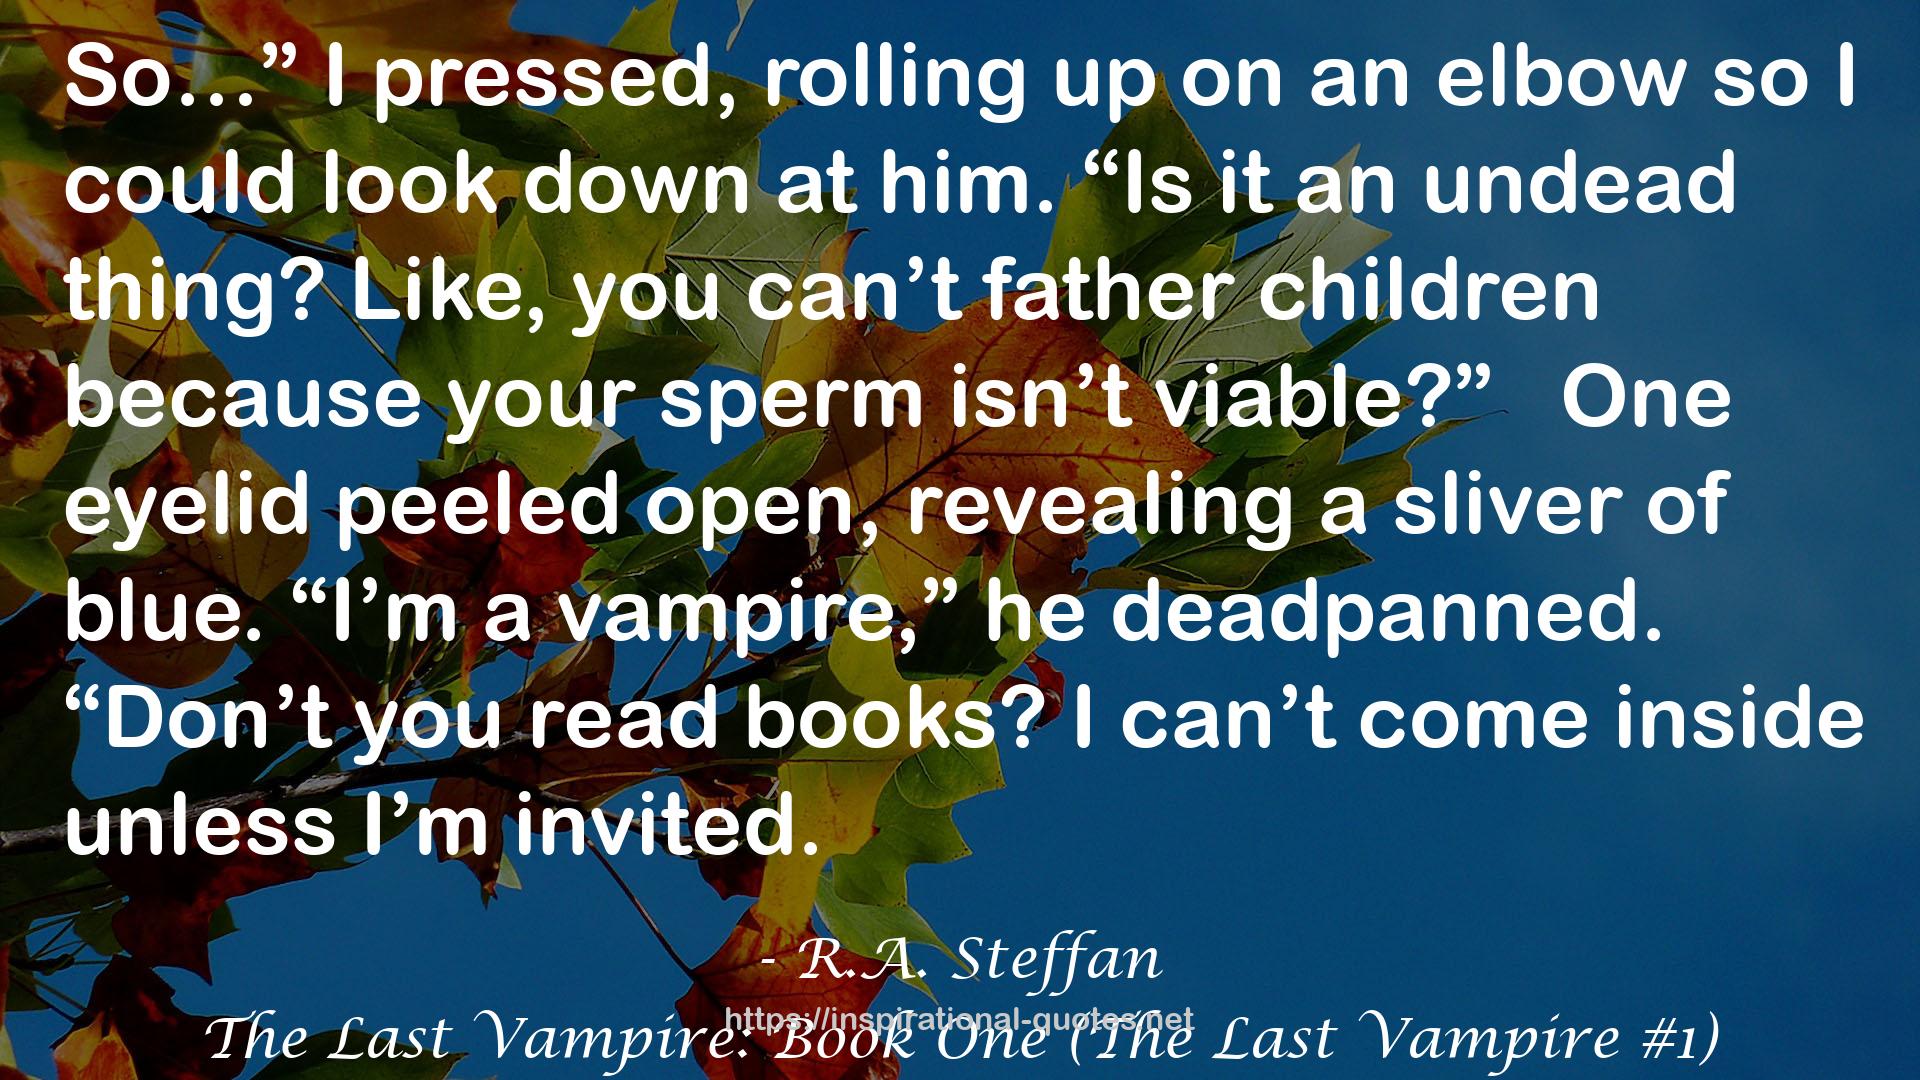 The Last Vampire: Book One (The Last Vampire #1) QUOTES